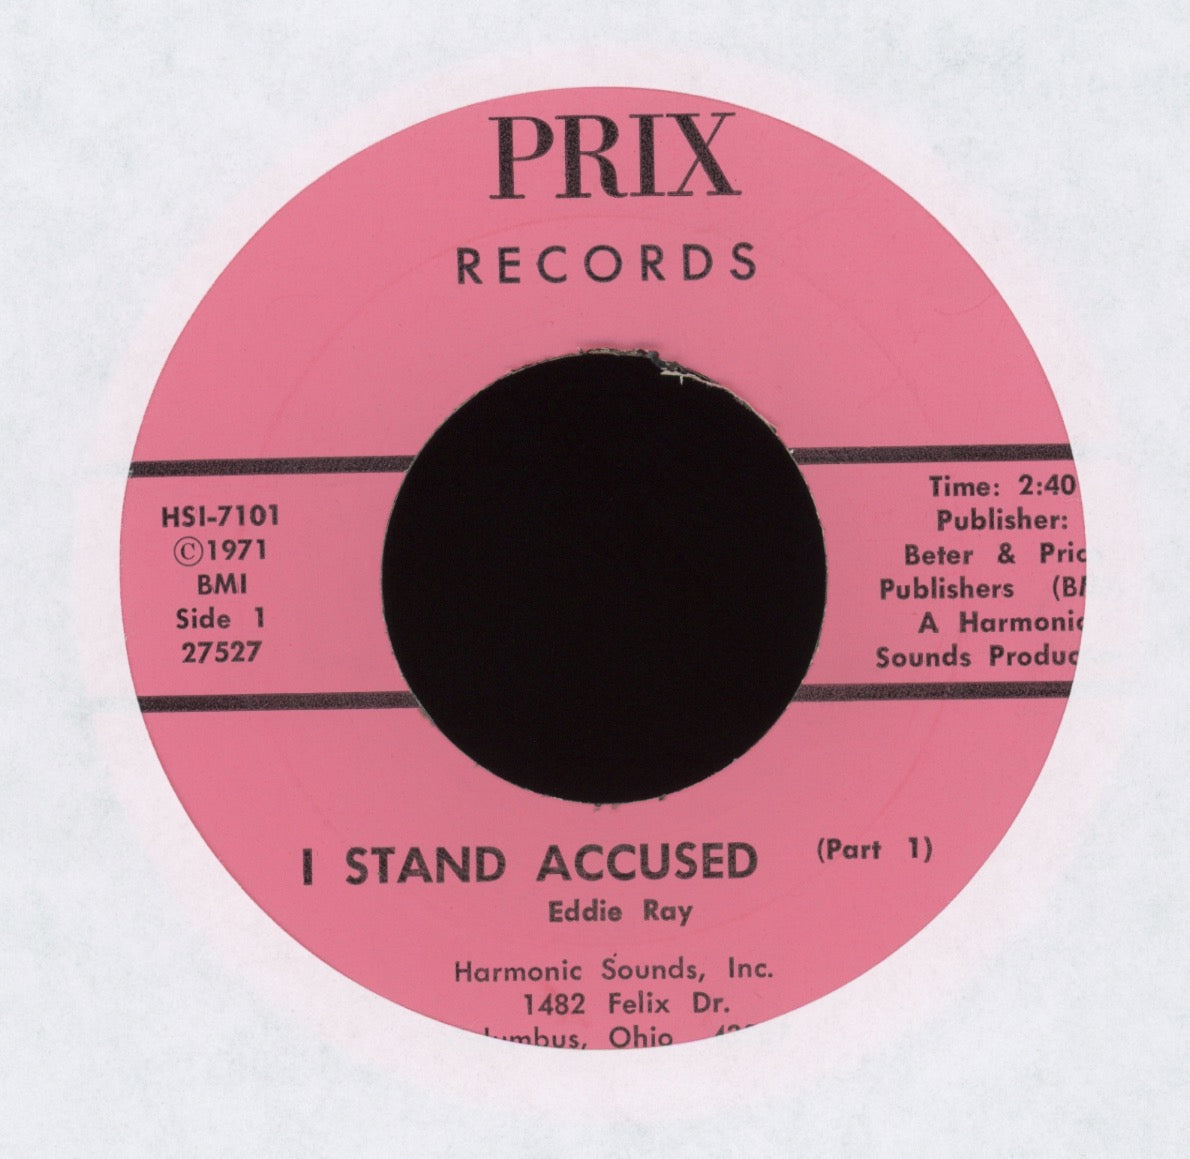 Eddie Ray - I Stand Accused on Prix